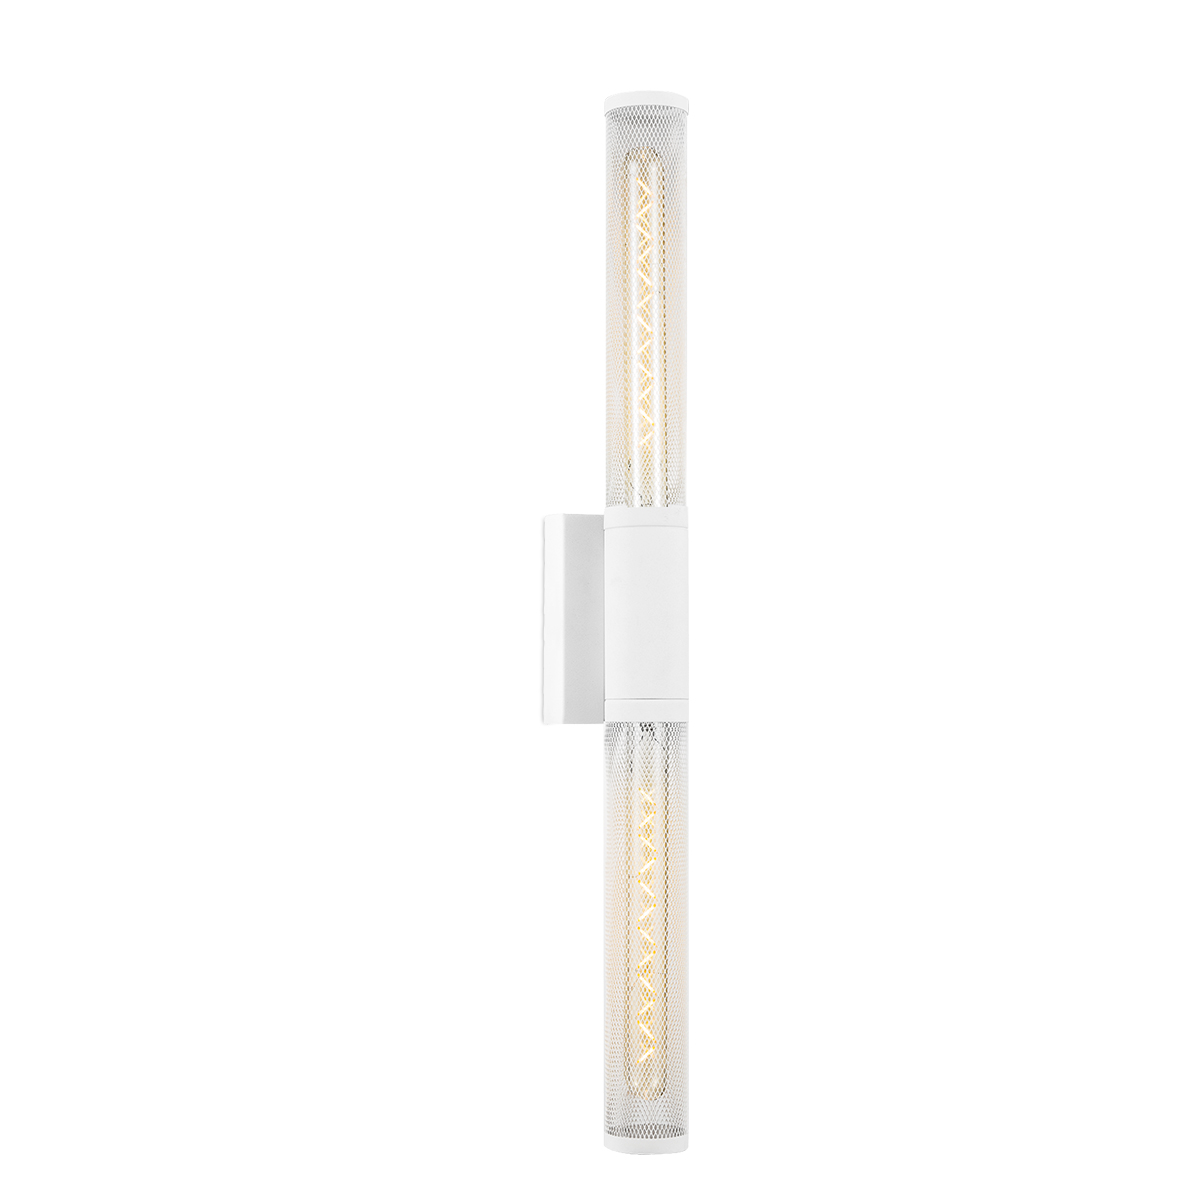 Tangla lighting - TLW3008-02SW - LED Wall lamp 2 Lights - metal - sand white - double cylinder mesh - E27